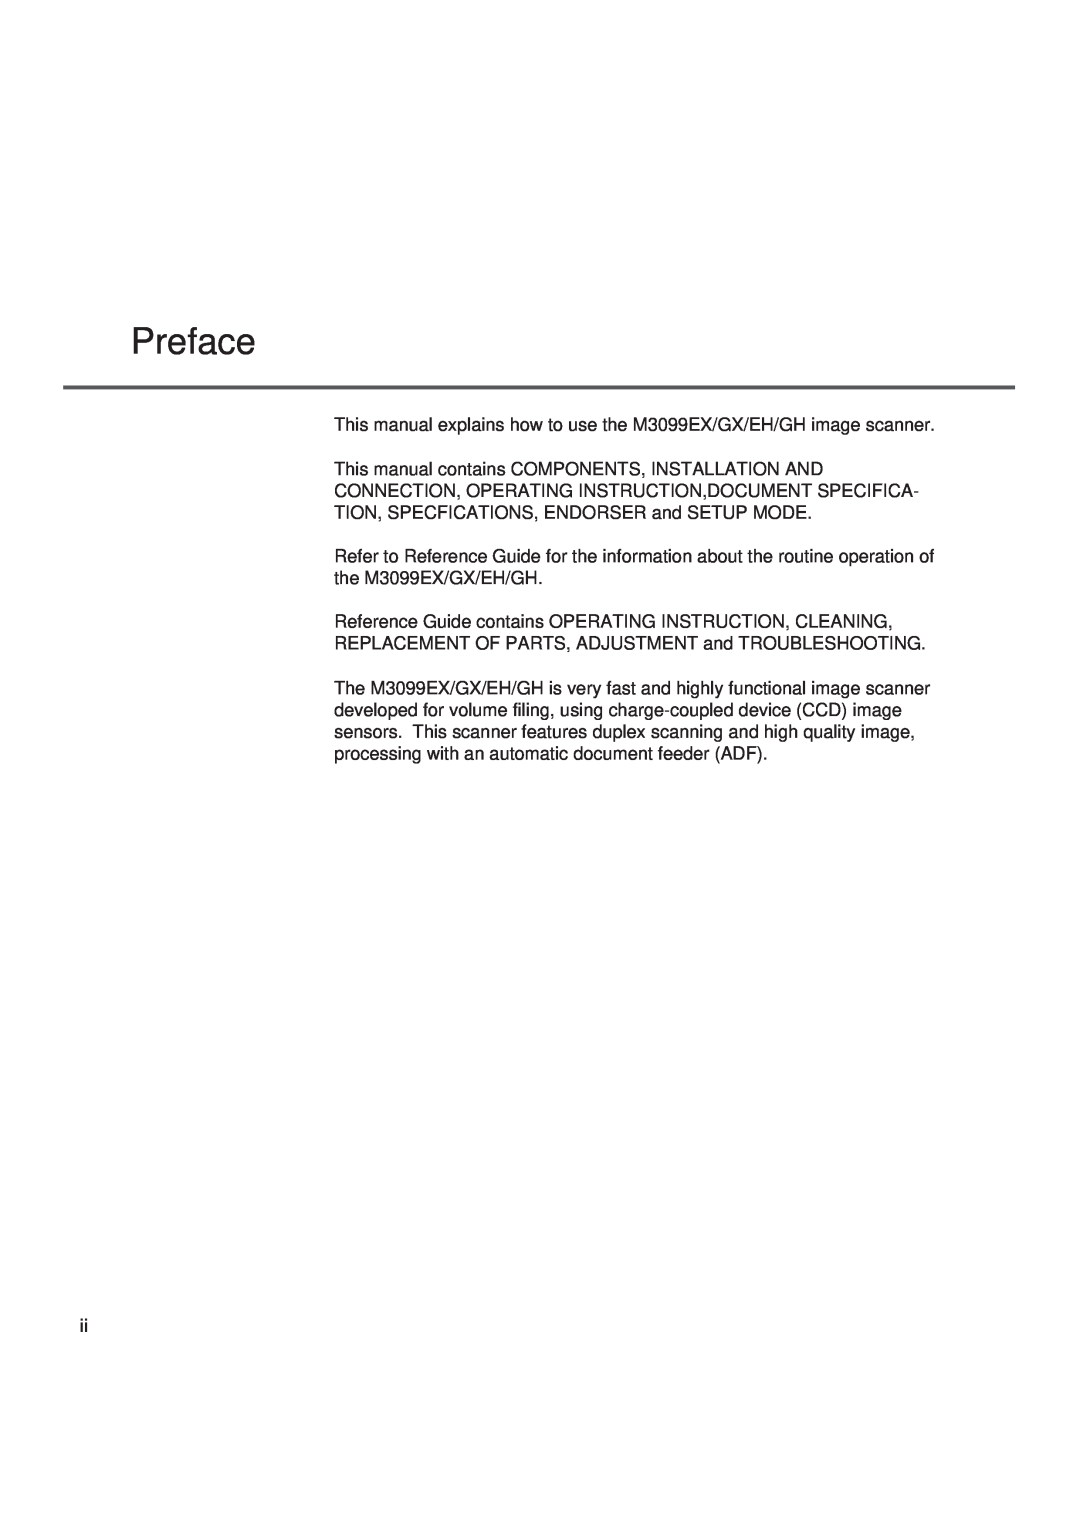 Fujitsu M3099EH, M3099GX, M3099GH, M3099EX manual Preface 